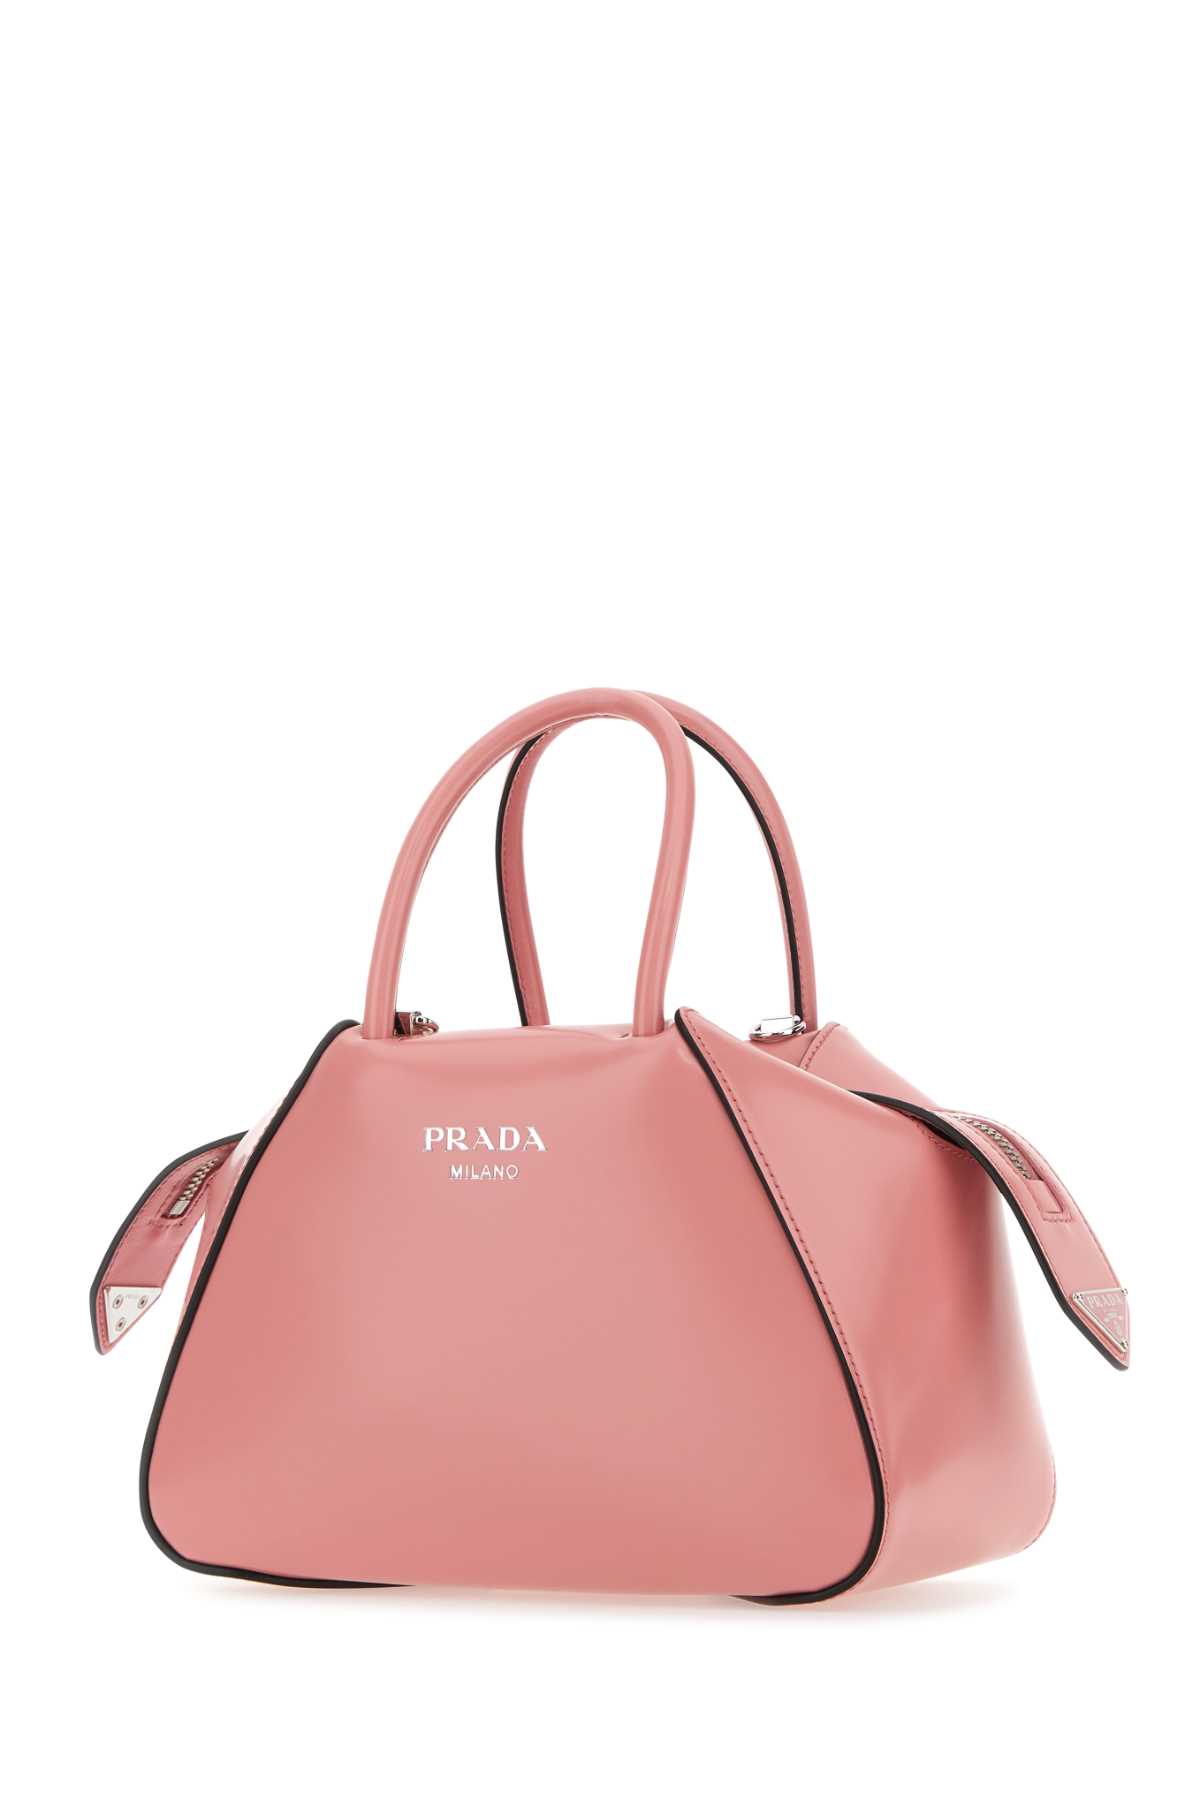 Prada Pink Leather Handbag In Petalo